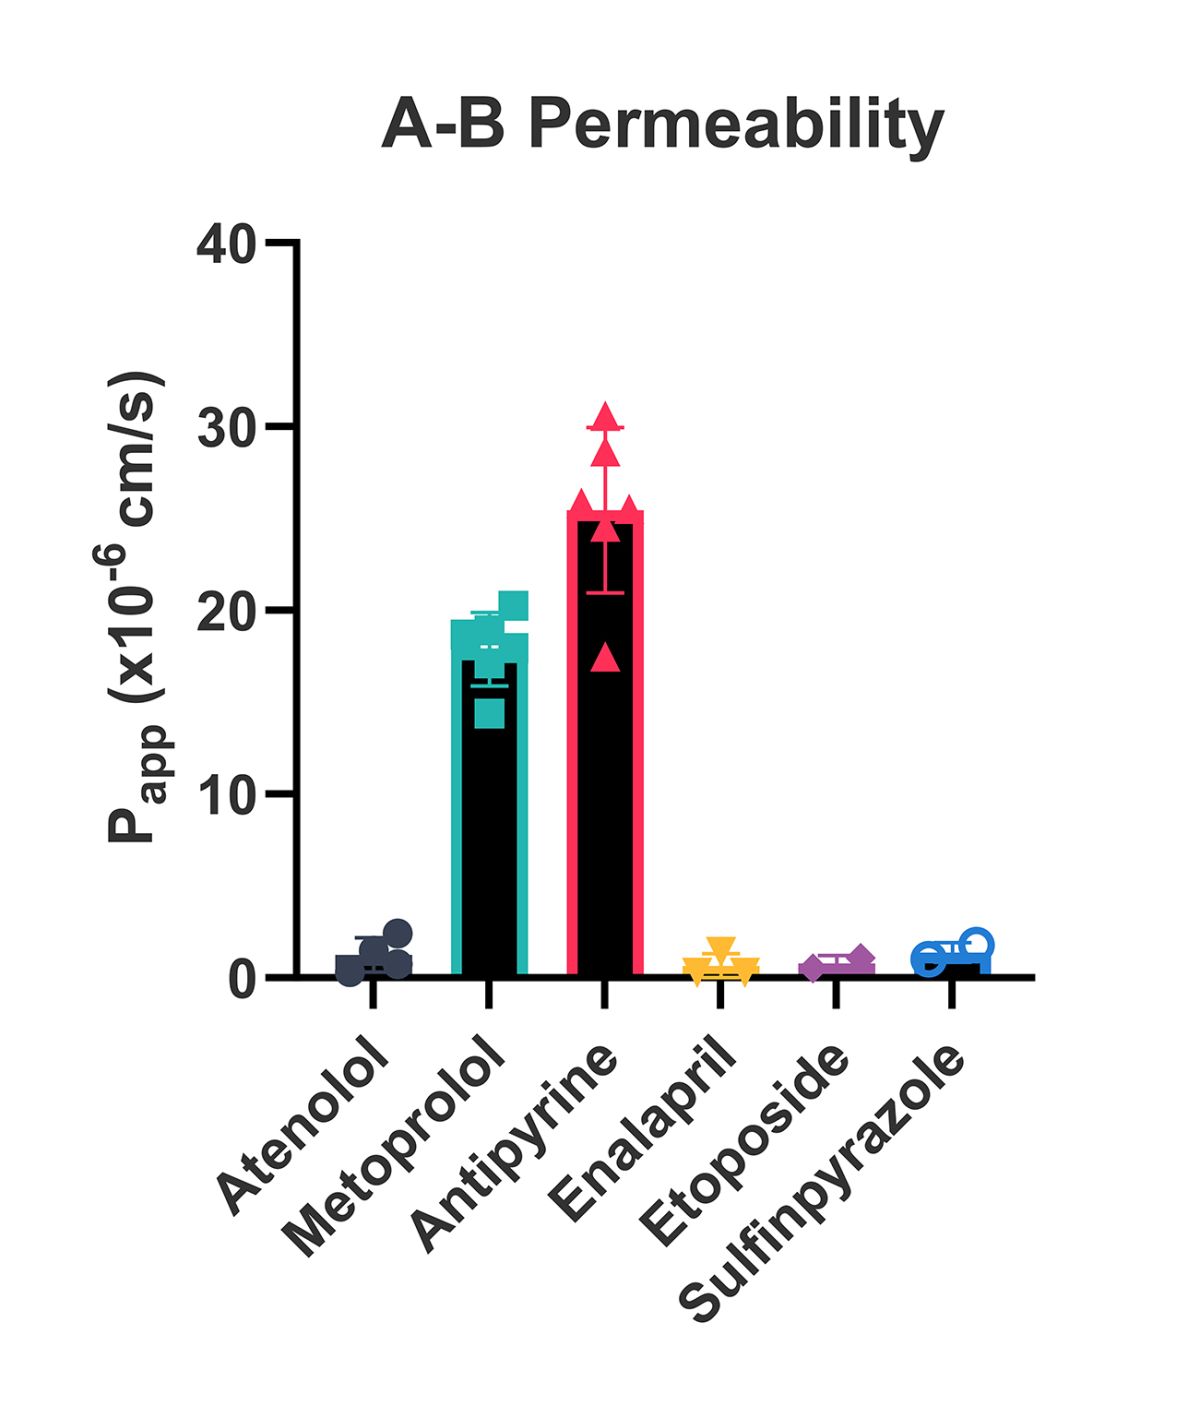 A-B permeability